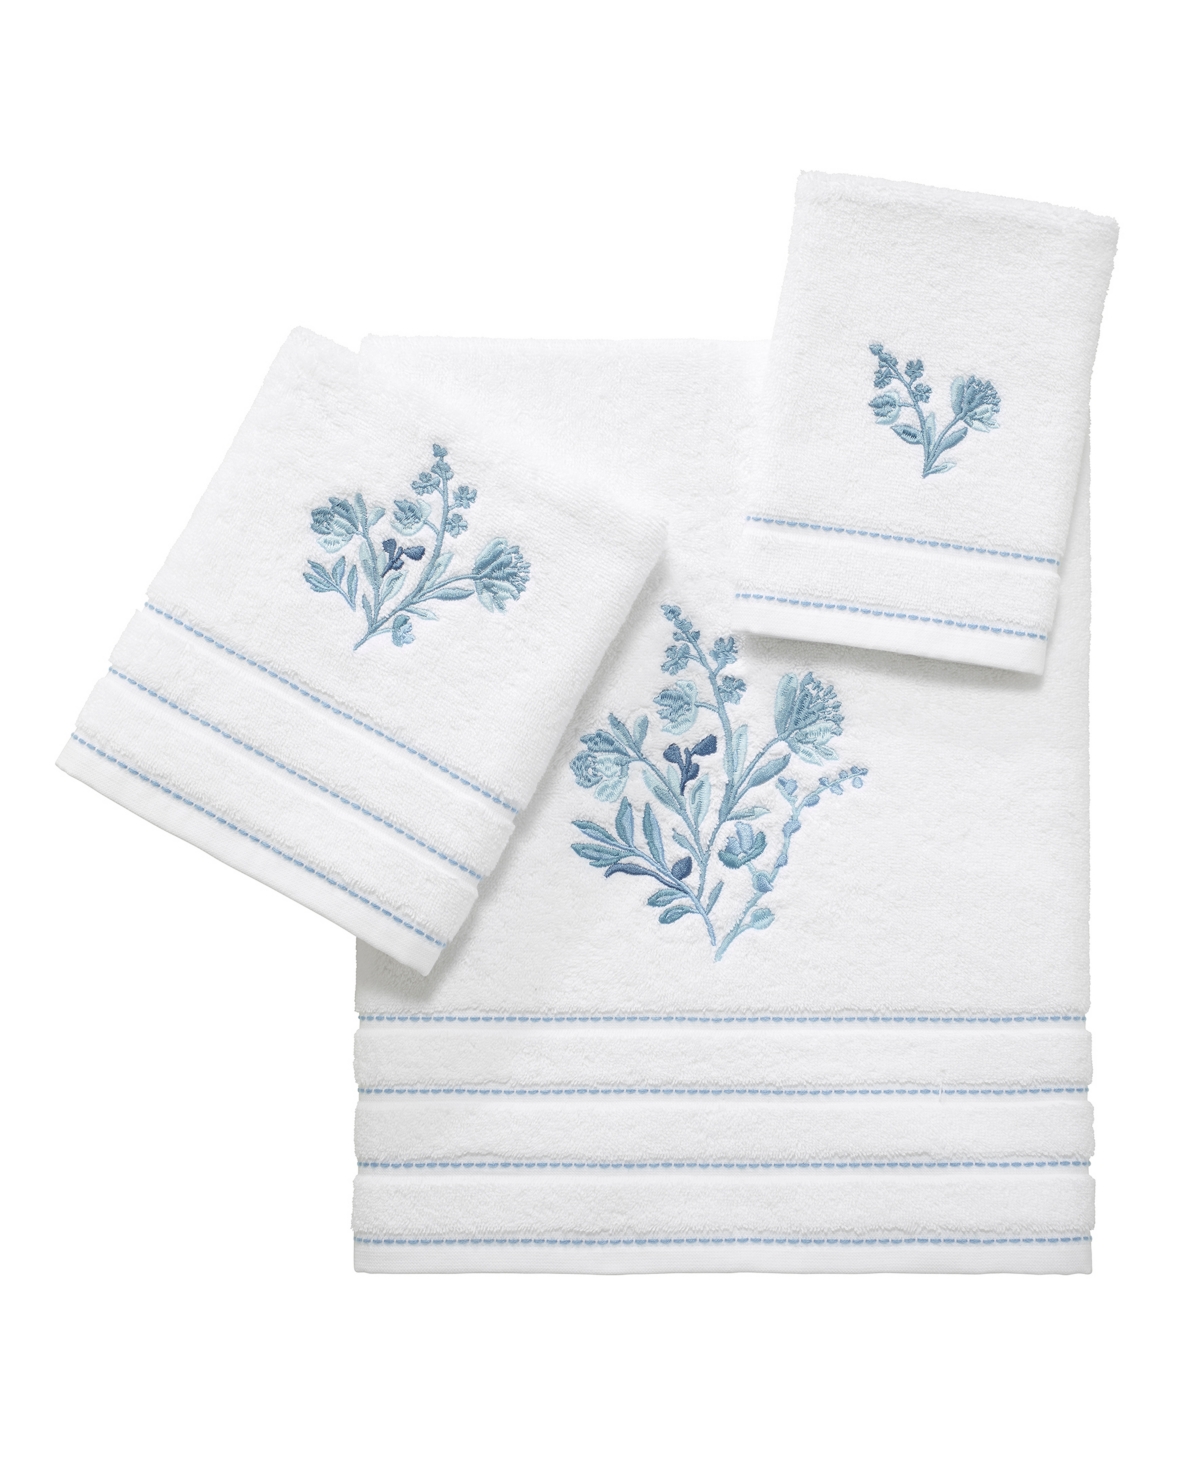 Izod Mystic Floral 3-pc. Towel Set In White